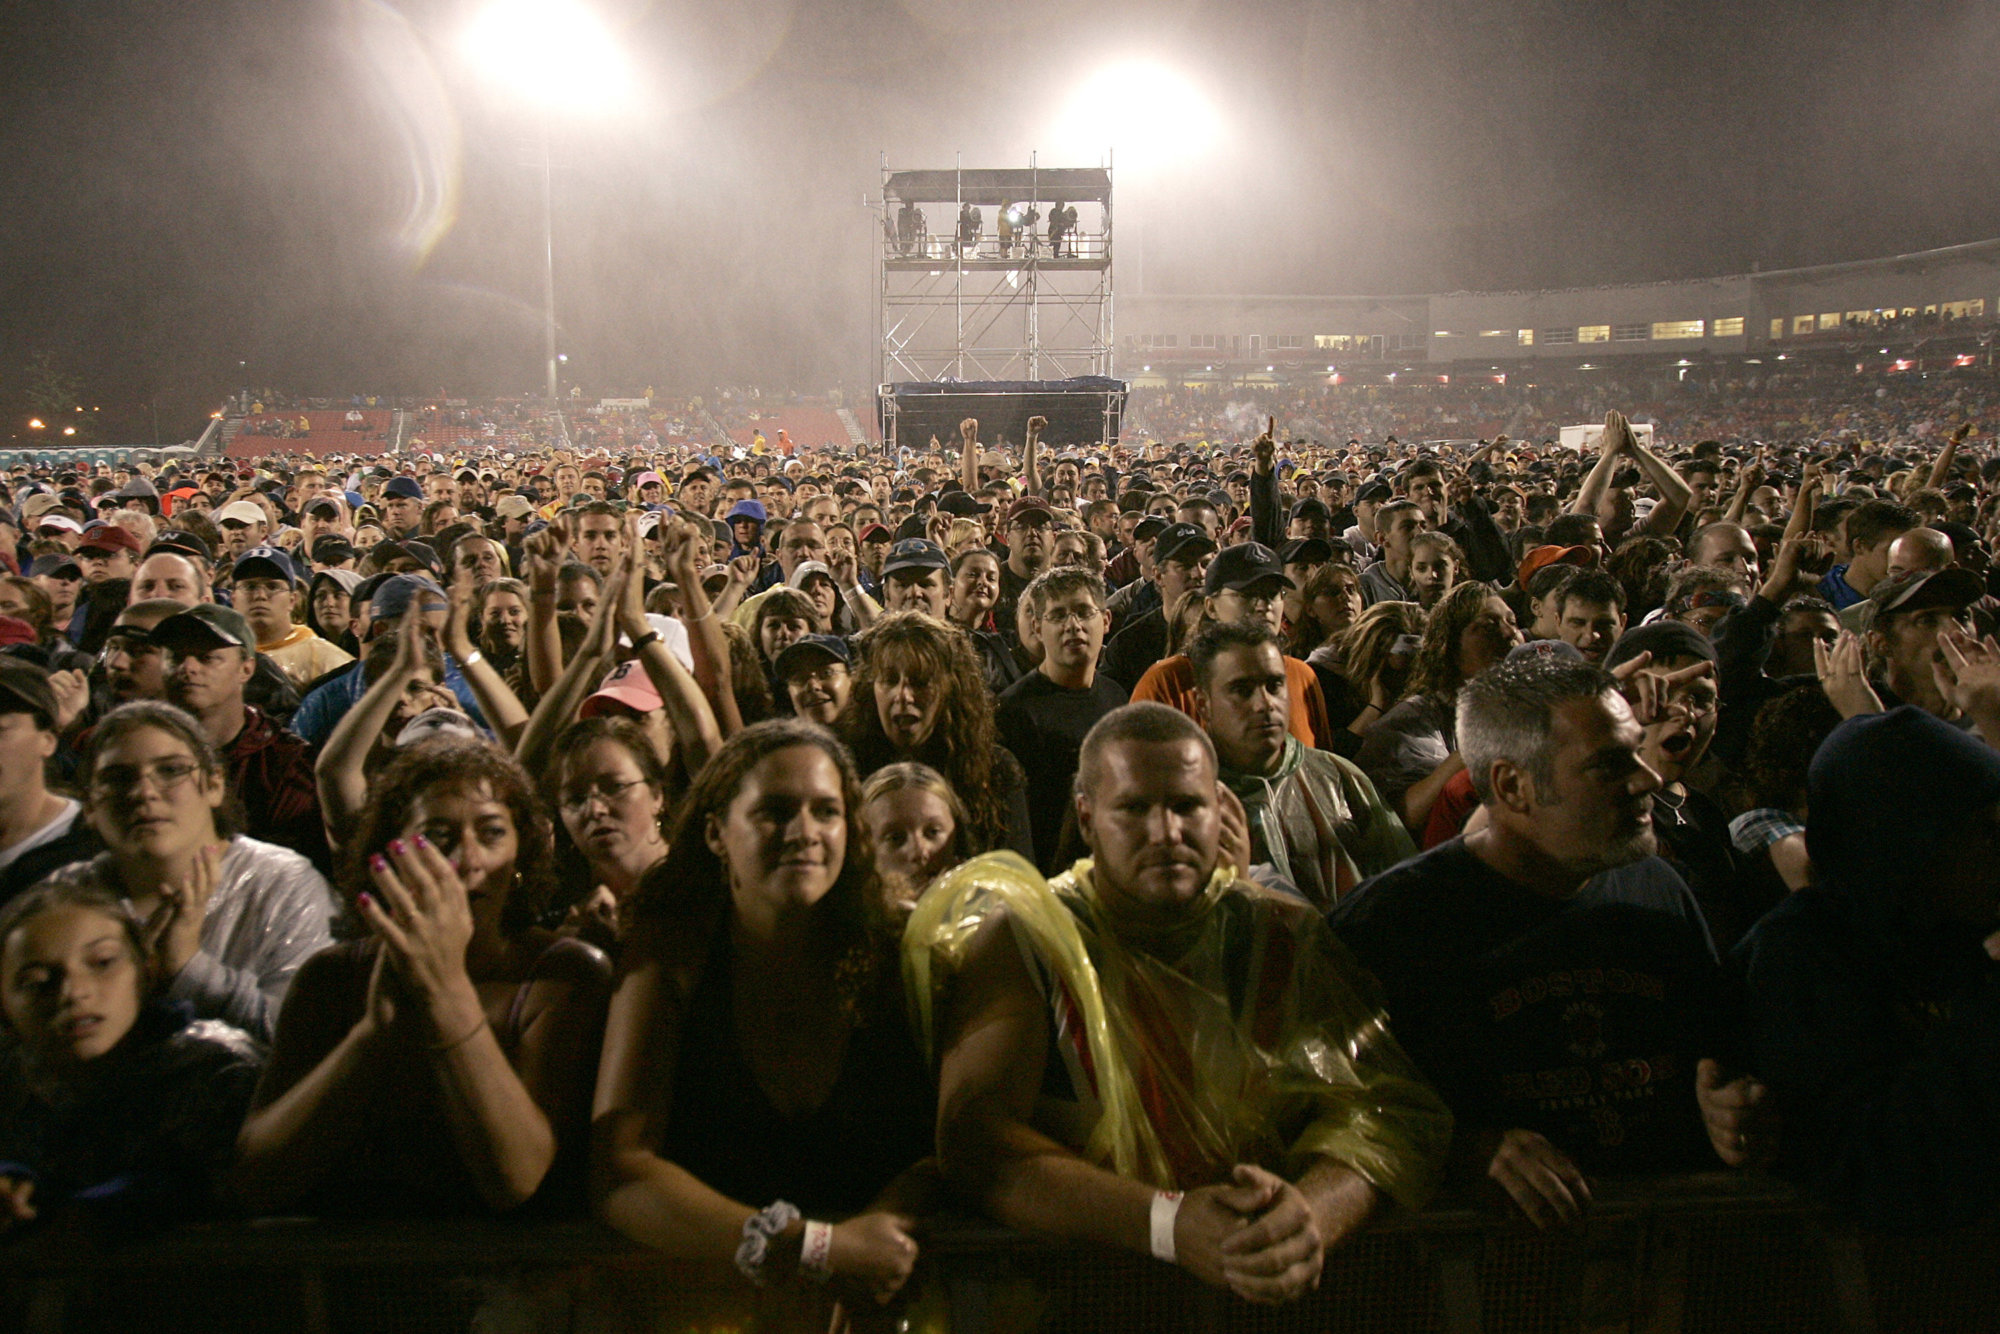 Rain-soaked fans watch British rock band Def Leppard perform at Campanelli Stadium in Brockton, Mass., July 6, 2005, during their summer tour with rock singer Bryan Adams. (AP Photo/Robert E. Klein)